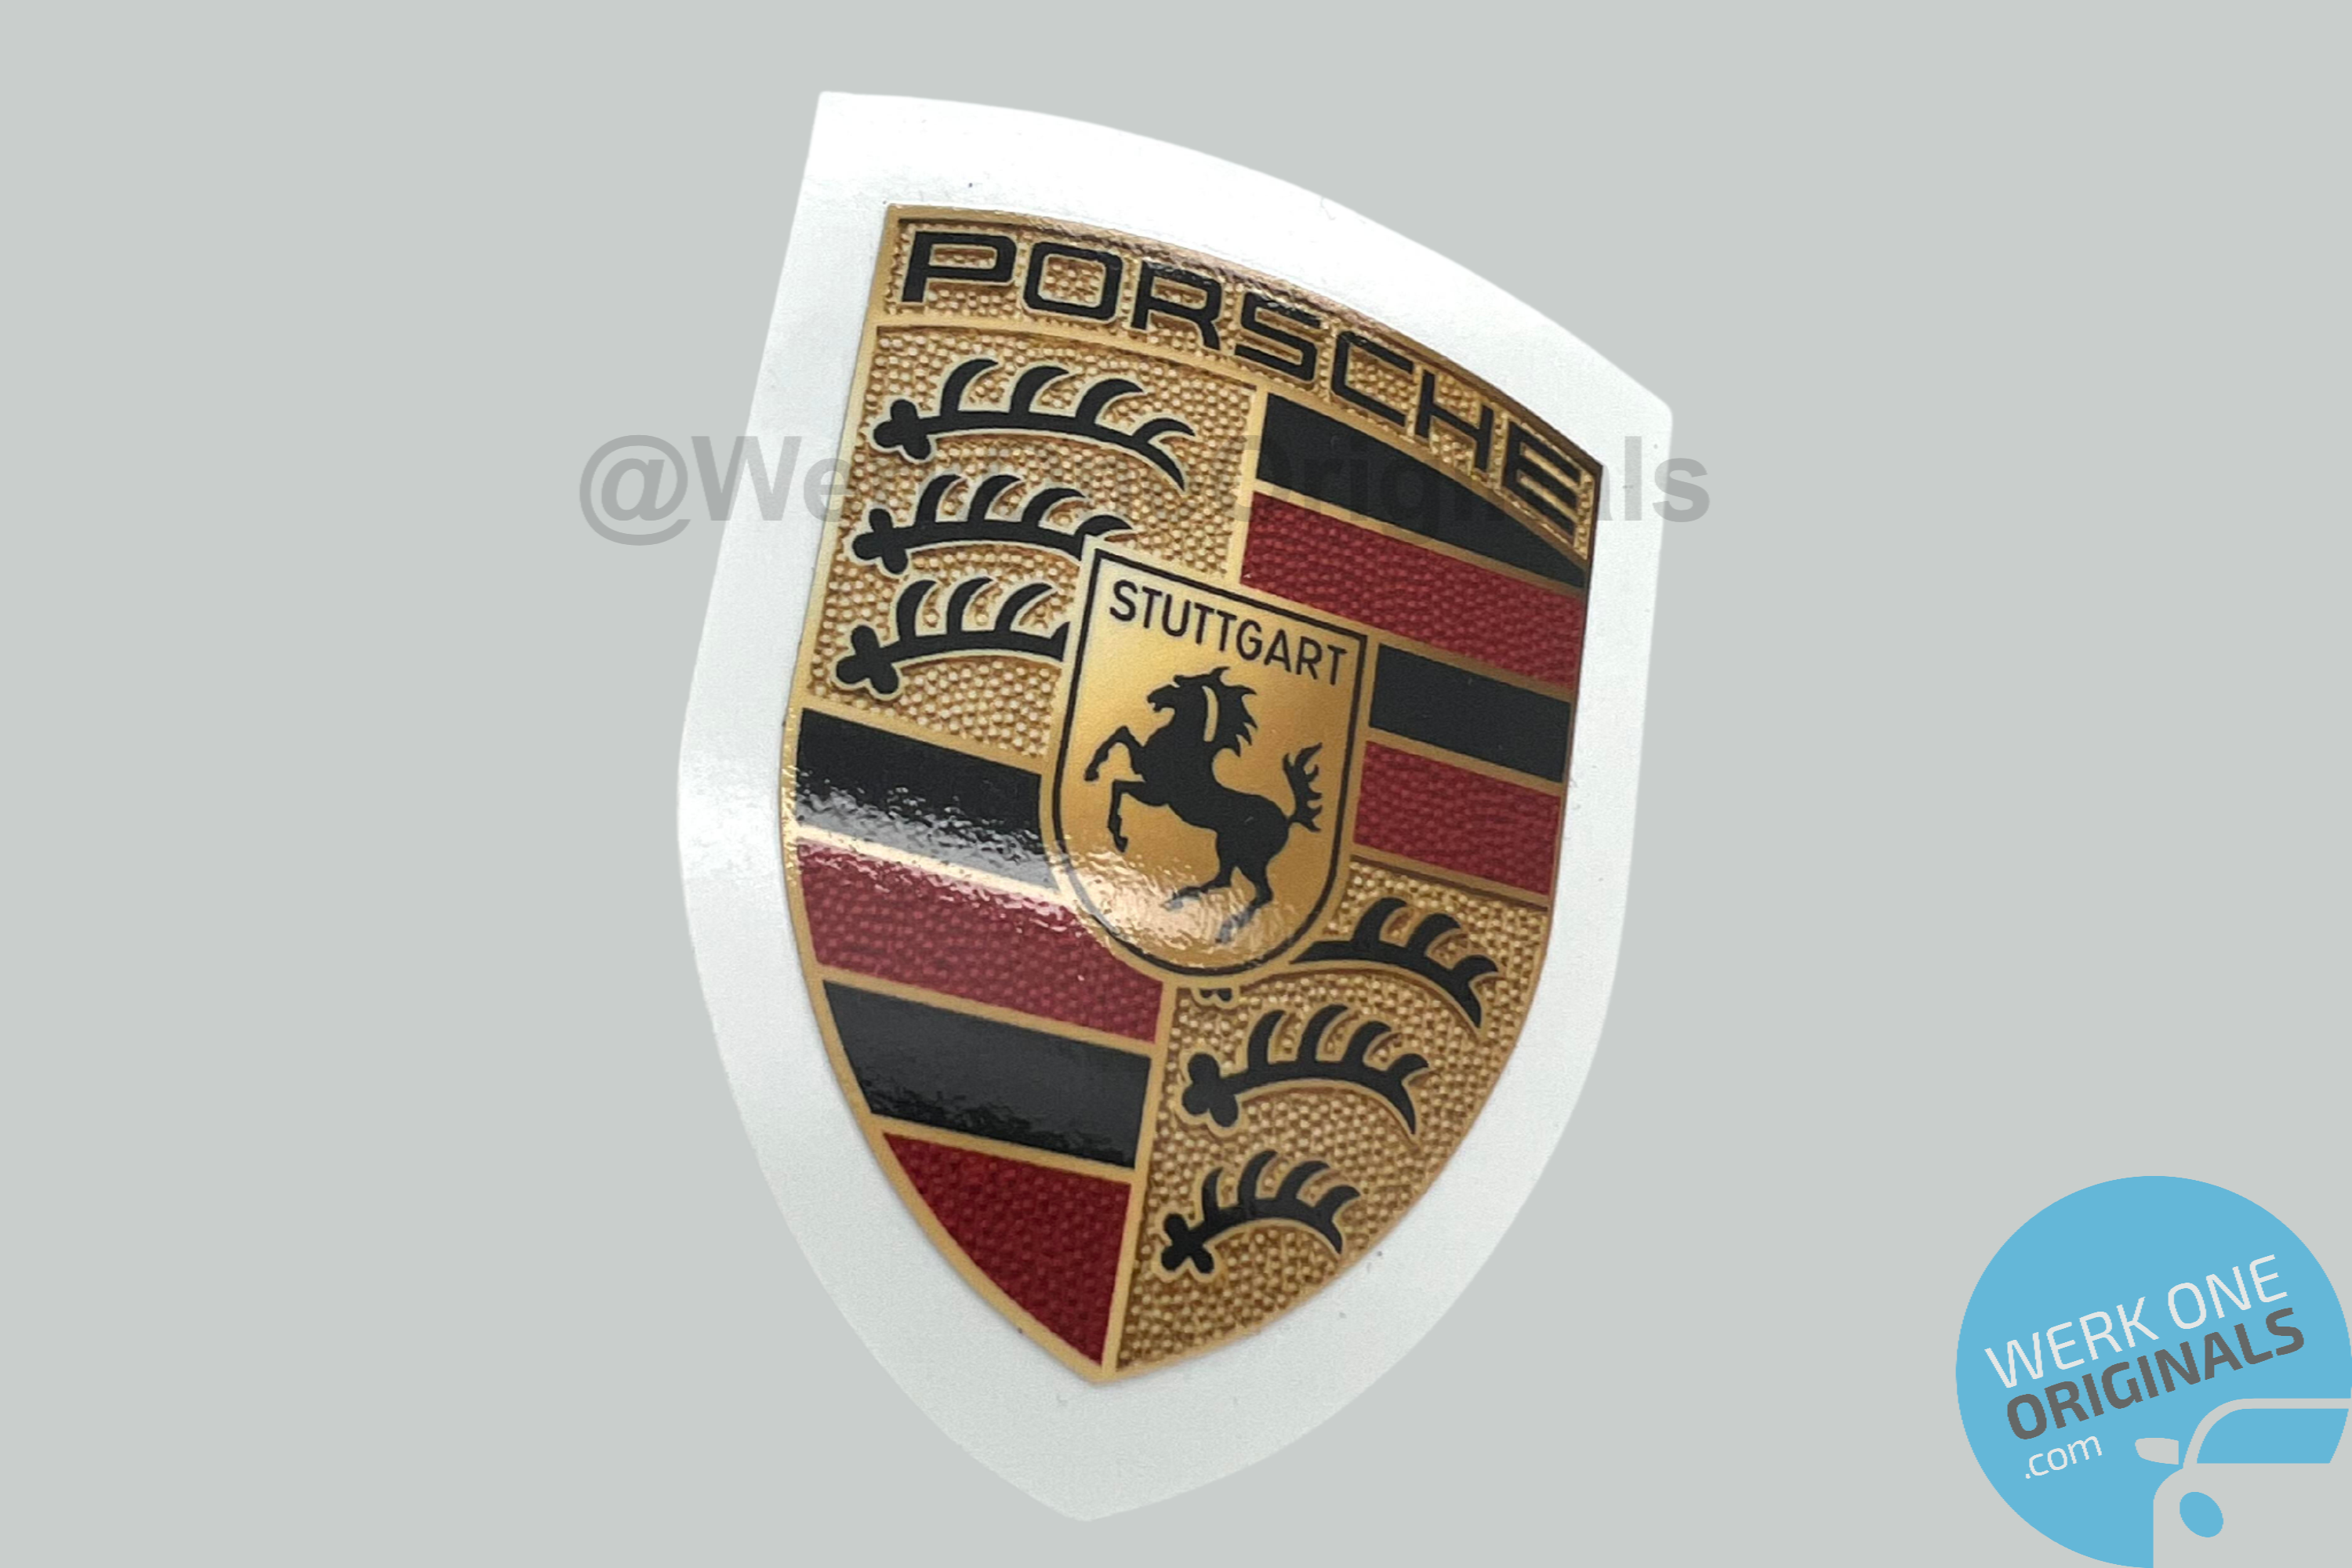 Porsche Official Crest Sticker - Bonnet Badge Sized Crest Sticker